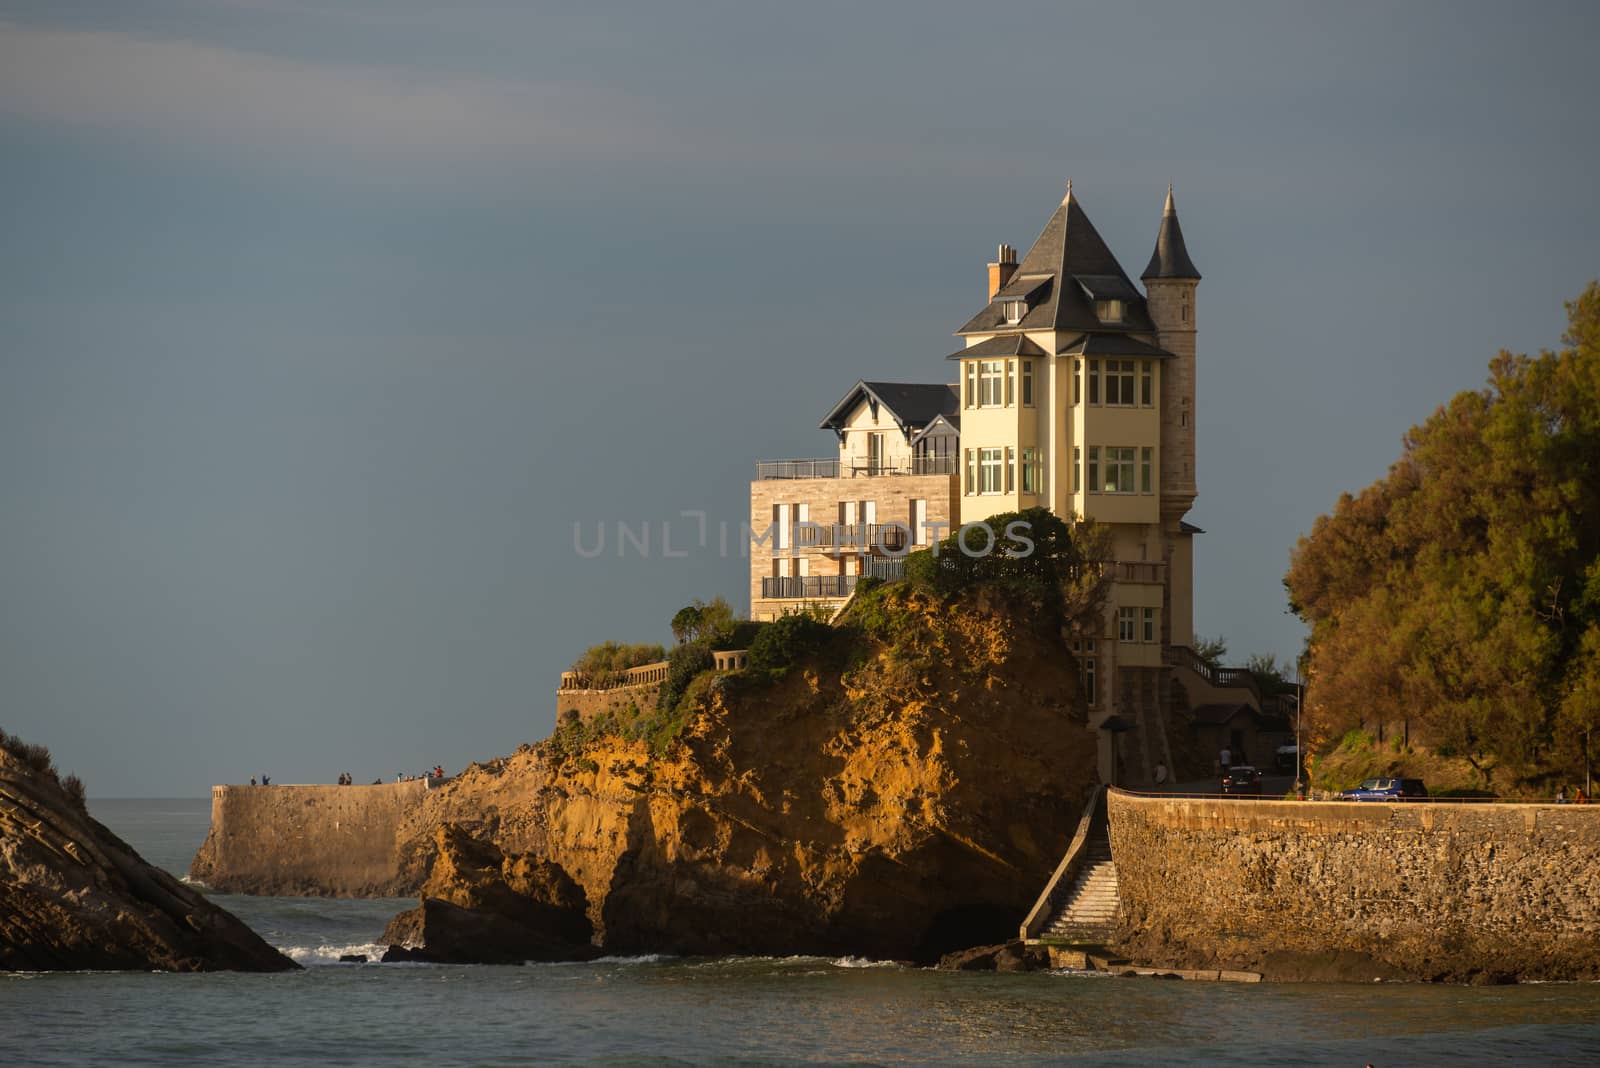 Villa Belza in Biarritz, France by dutourdumonde